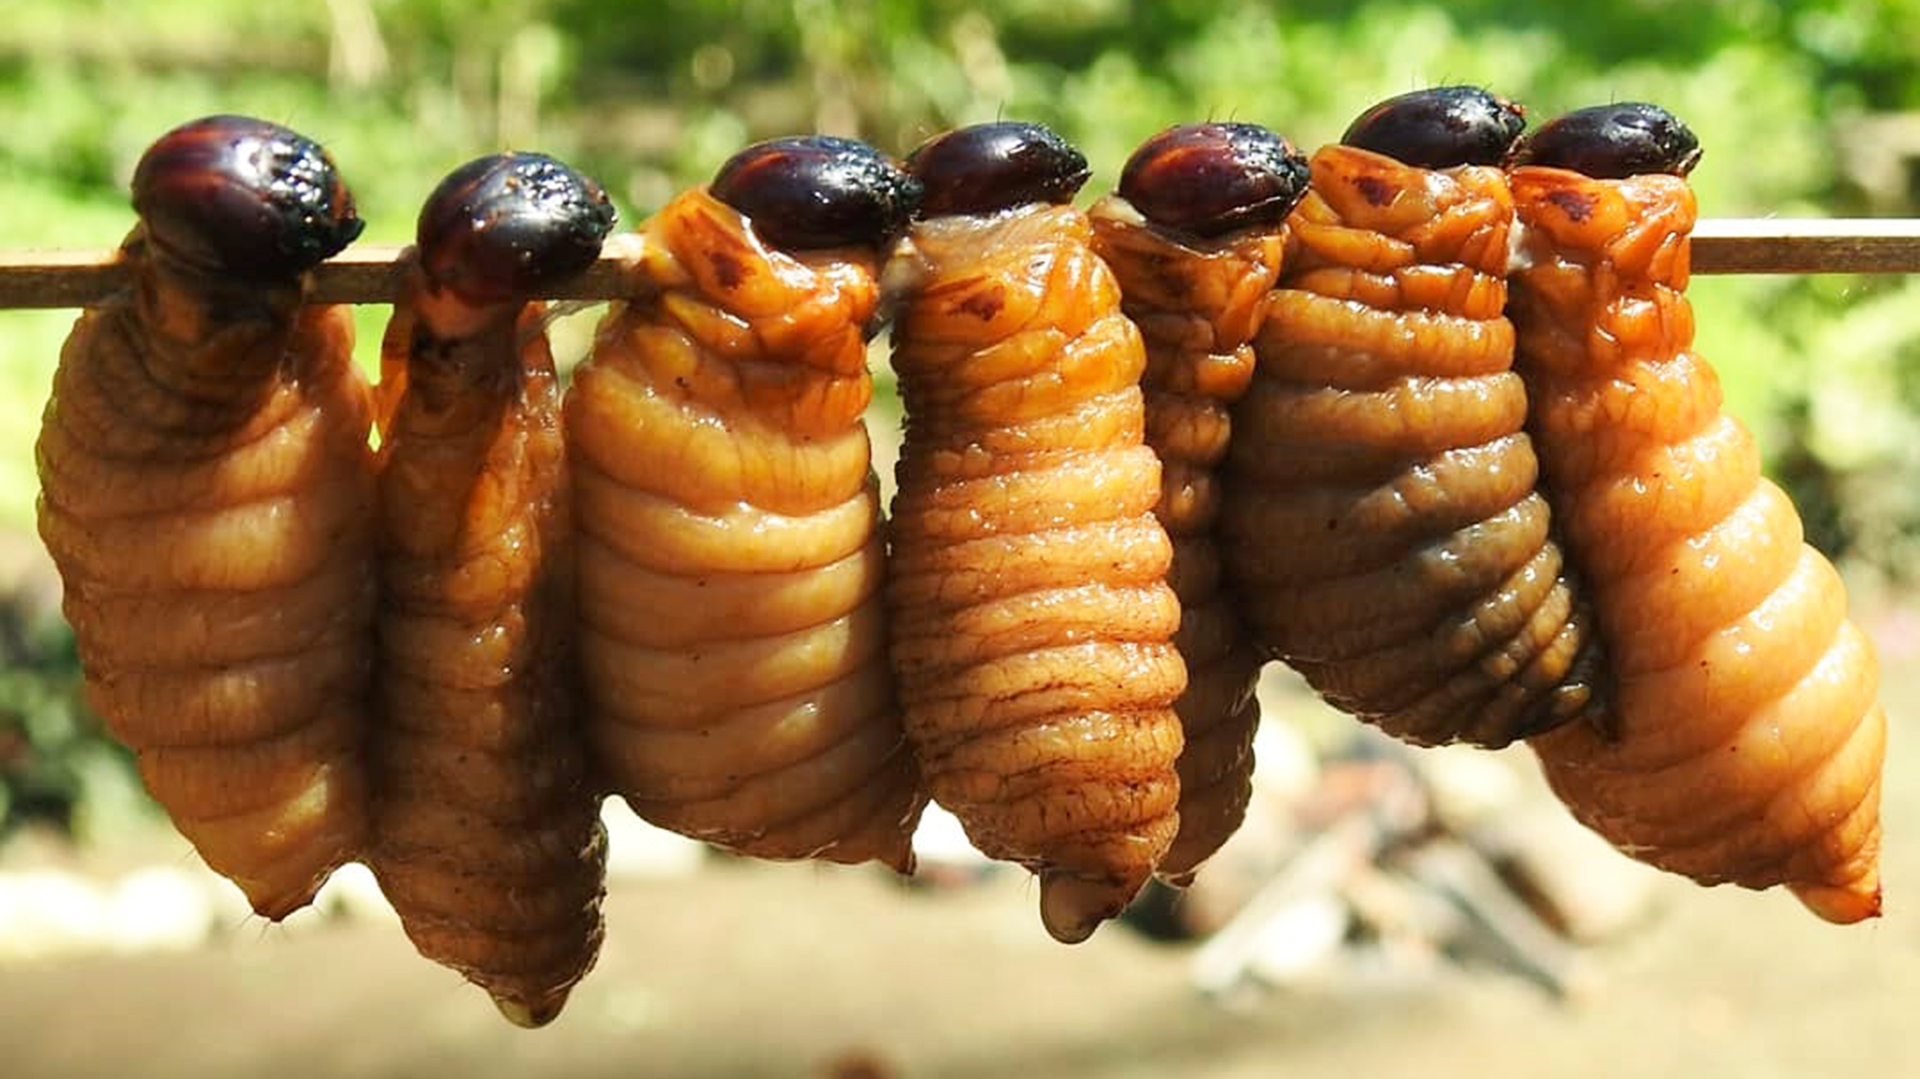 Top 10 unusual foods to try in Vietnam: The coconut beetle-larva